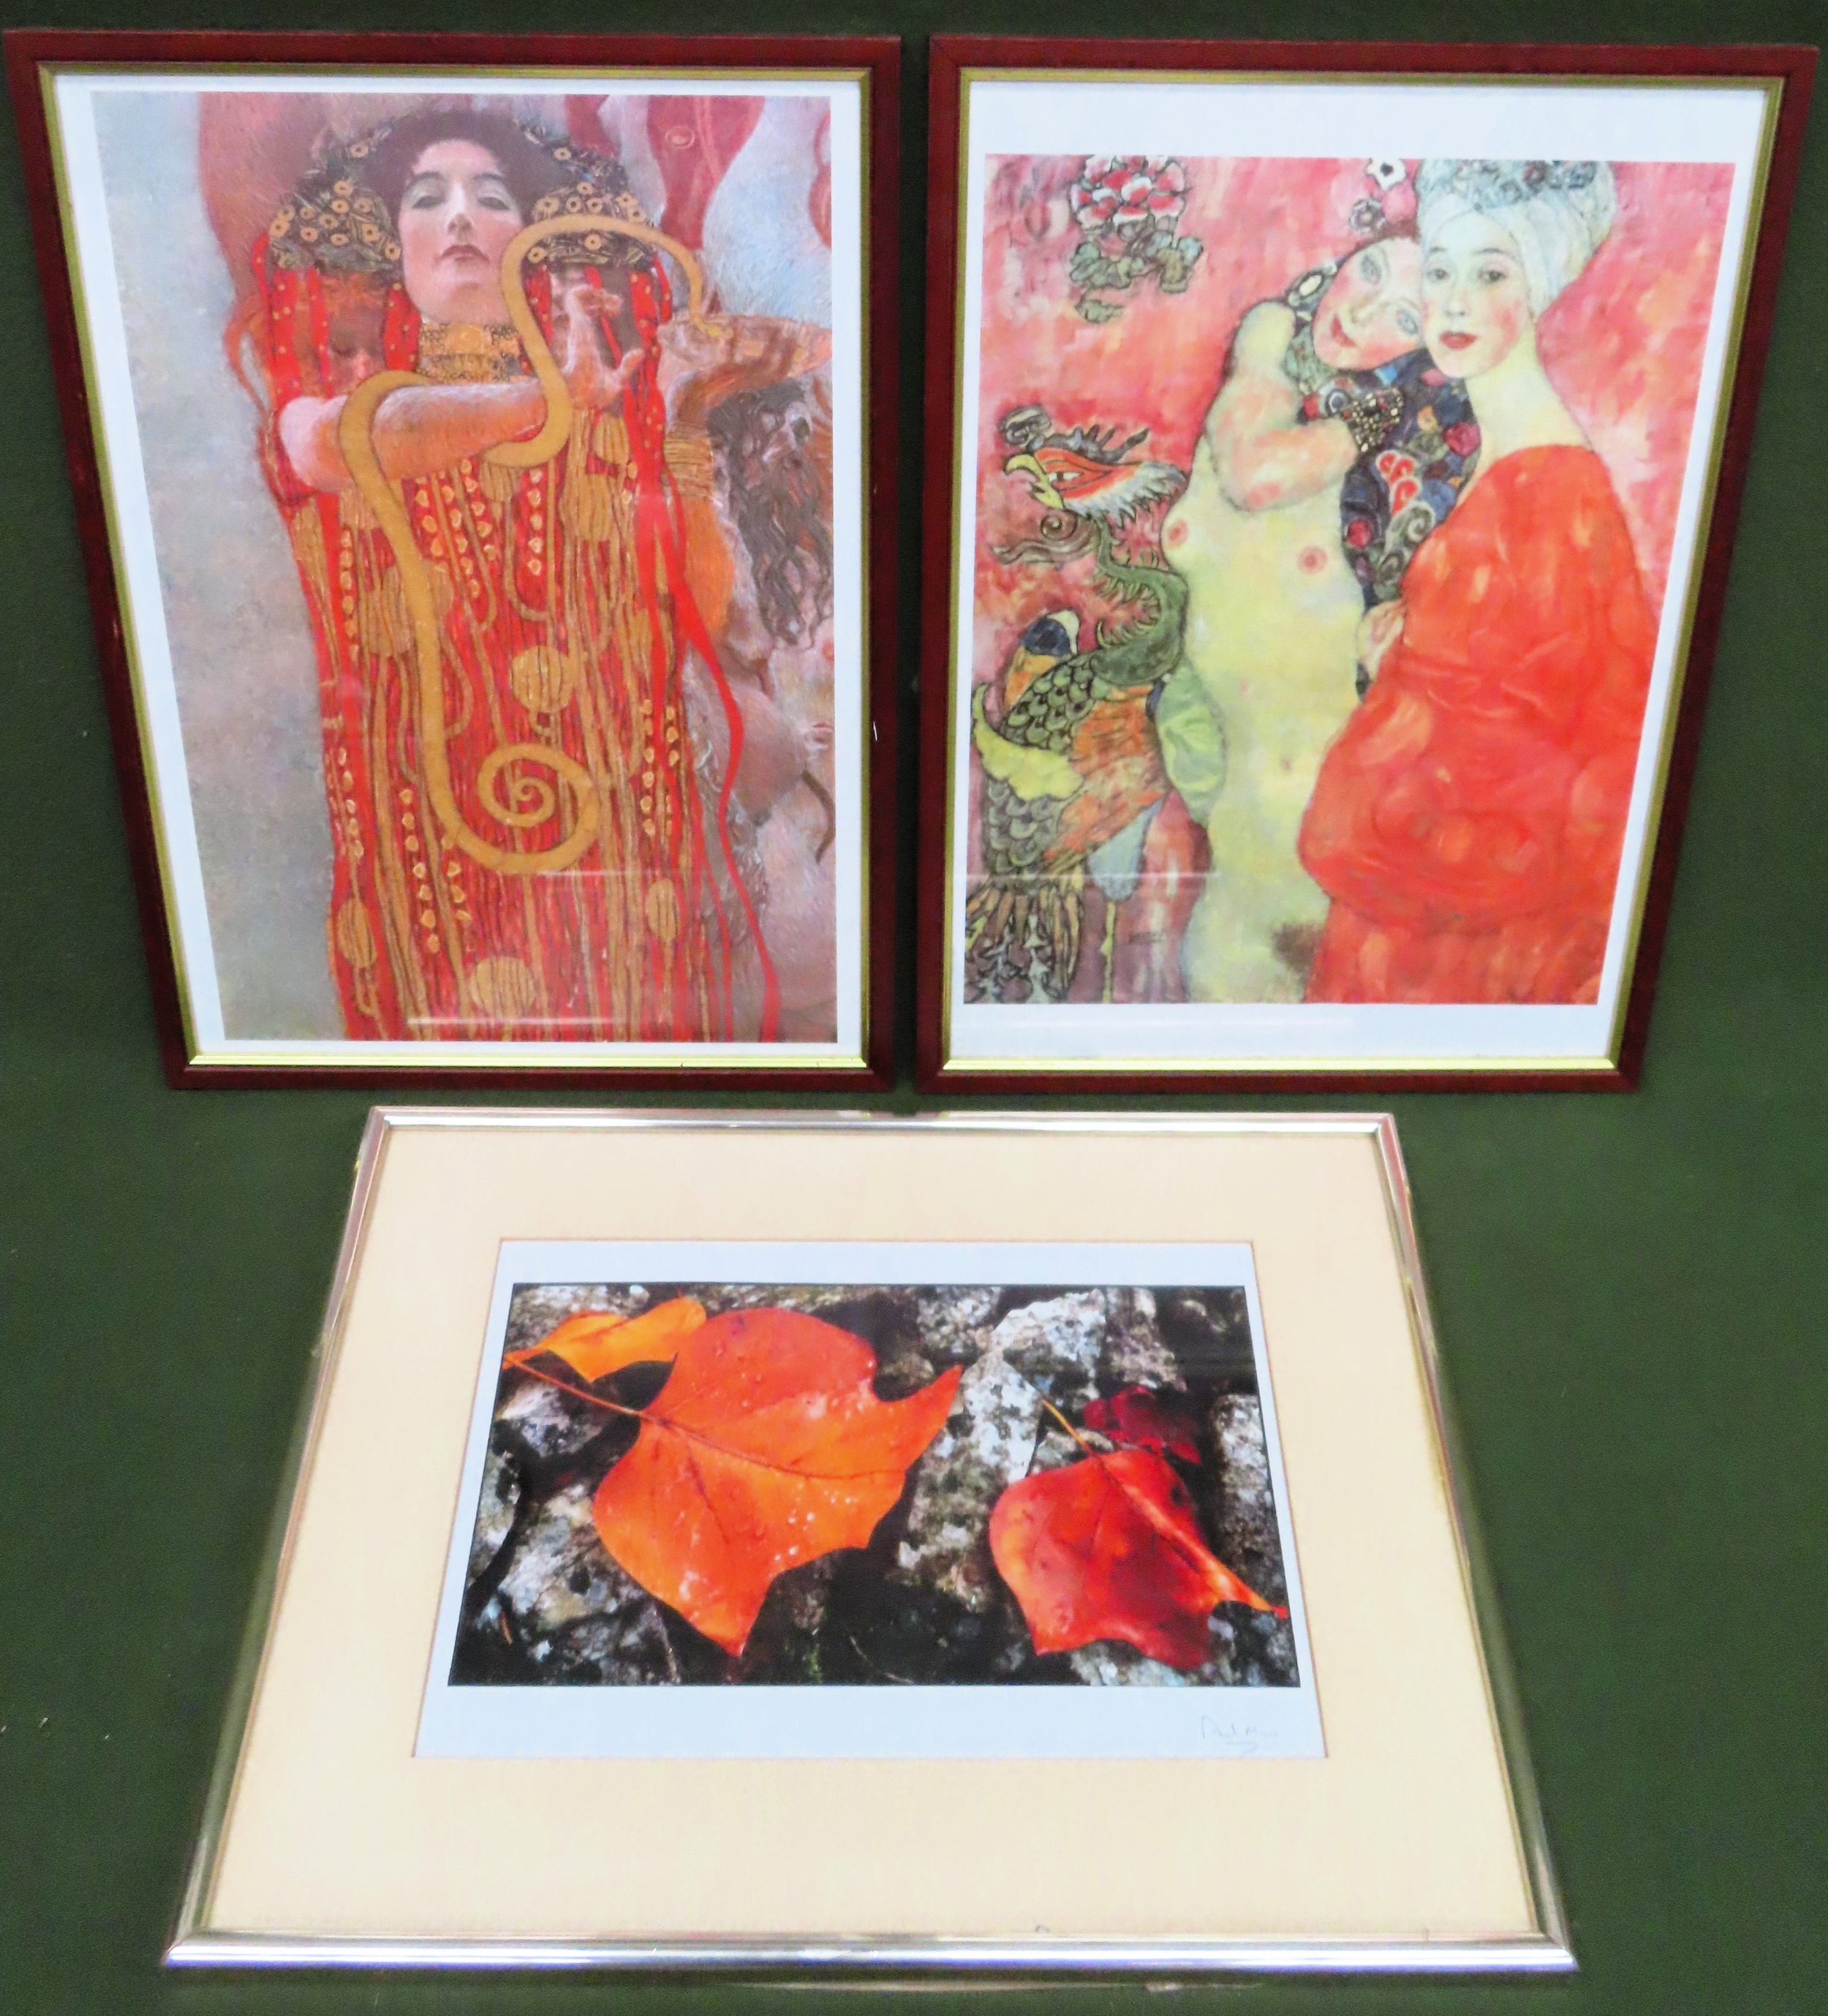 Phil Mann framed pencil signed polychrome print, plus Gustav Klimt polychrome prints All appear in